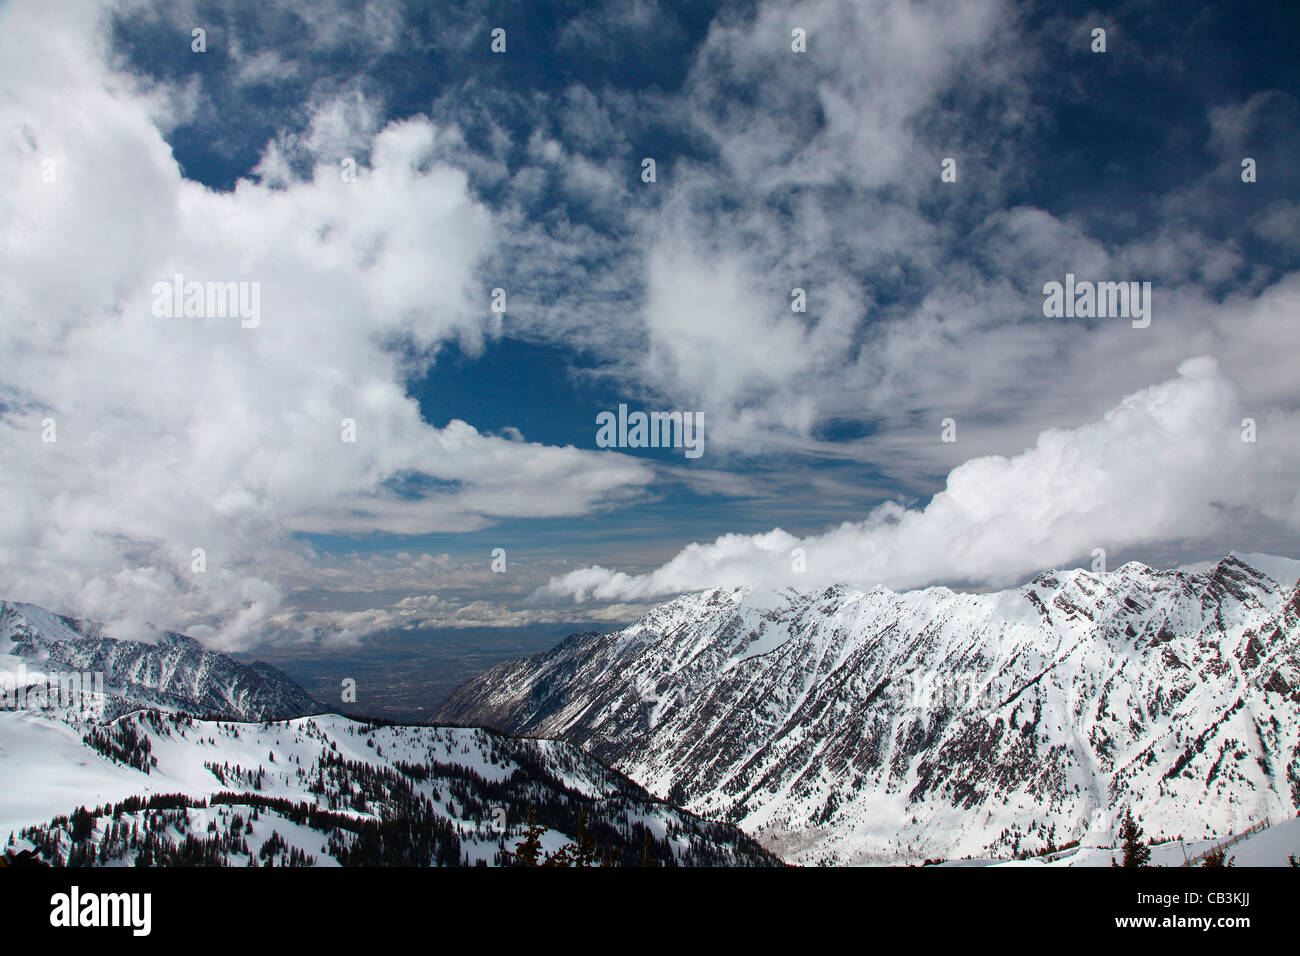 Nuvole sopra montagne Wasatch Mountains, Uinta-Wasatch-Cache National Forest, Salt Lake City, Utah, Stati Uniti d'America Foto Stock